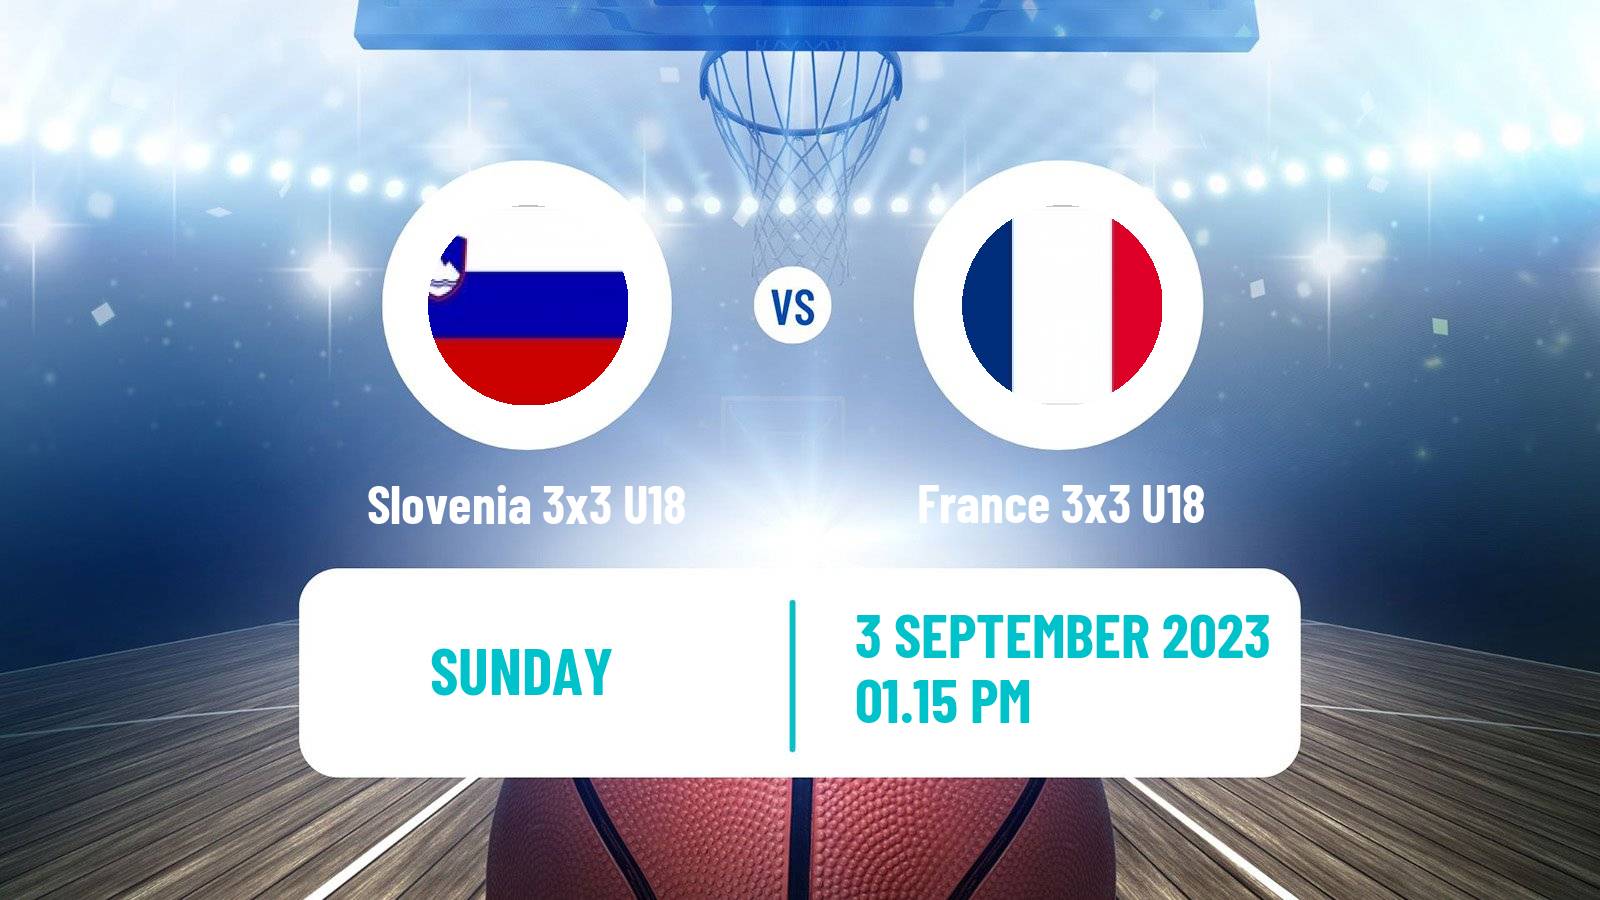 Basketball World Cup Basketball 3x3 U18 Slovenia 3x3 U18 - France 3x3 U18